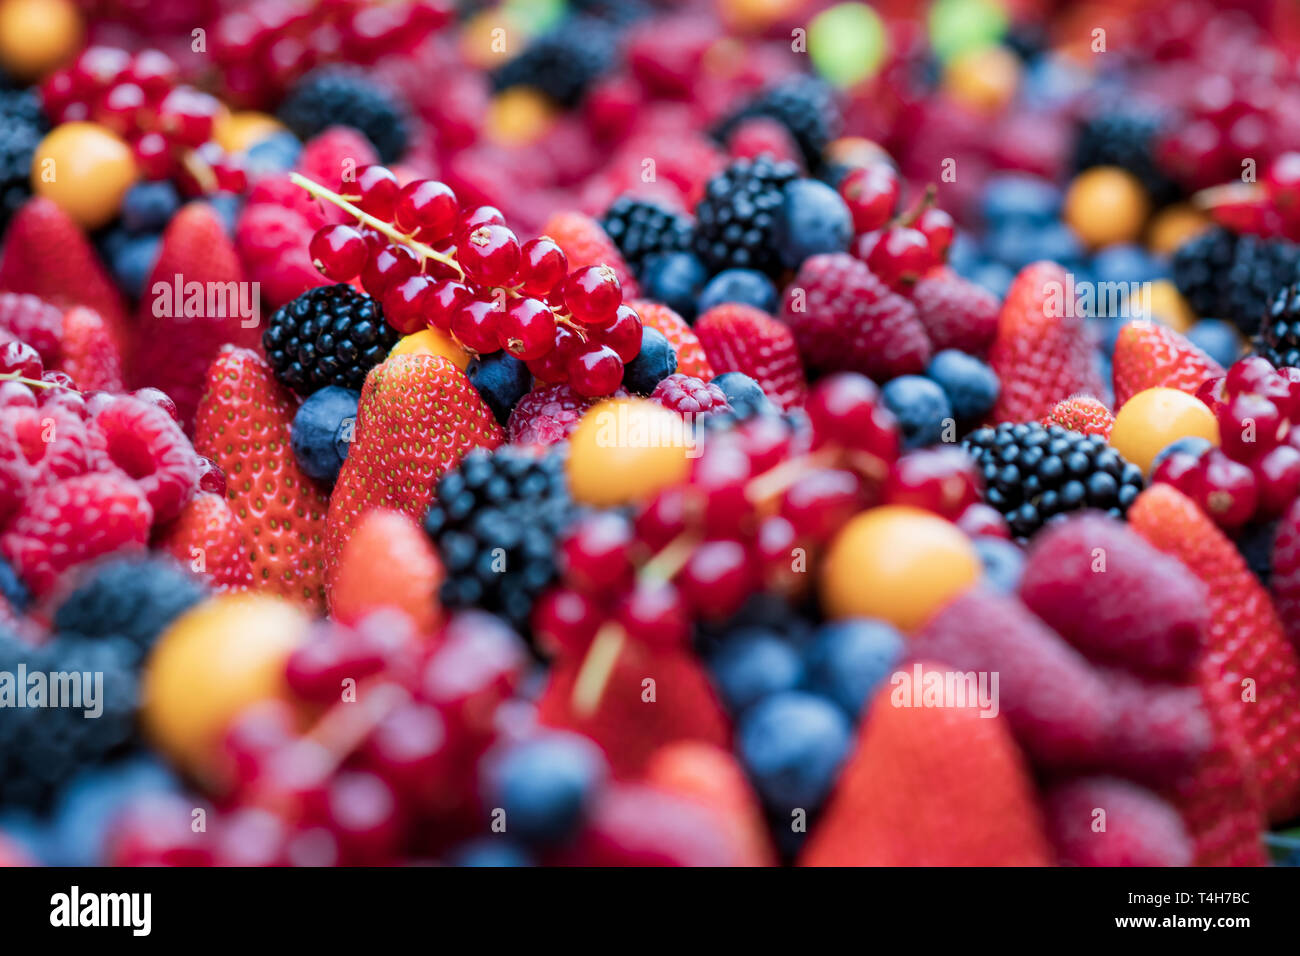 Nahaufnahme von einer Auswahl an hellen, frischen Obst Beeren - Erdbeere, Heidelbeere, Himbeere, Brombeere, Rot Stockfoto